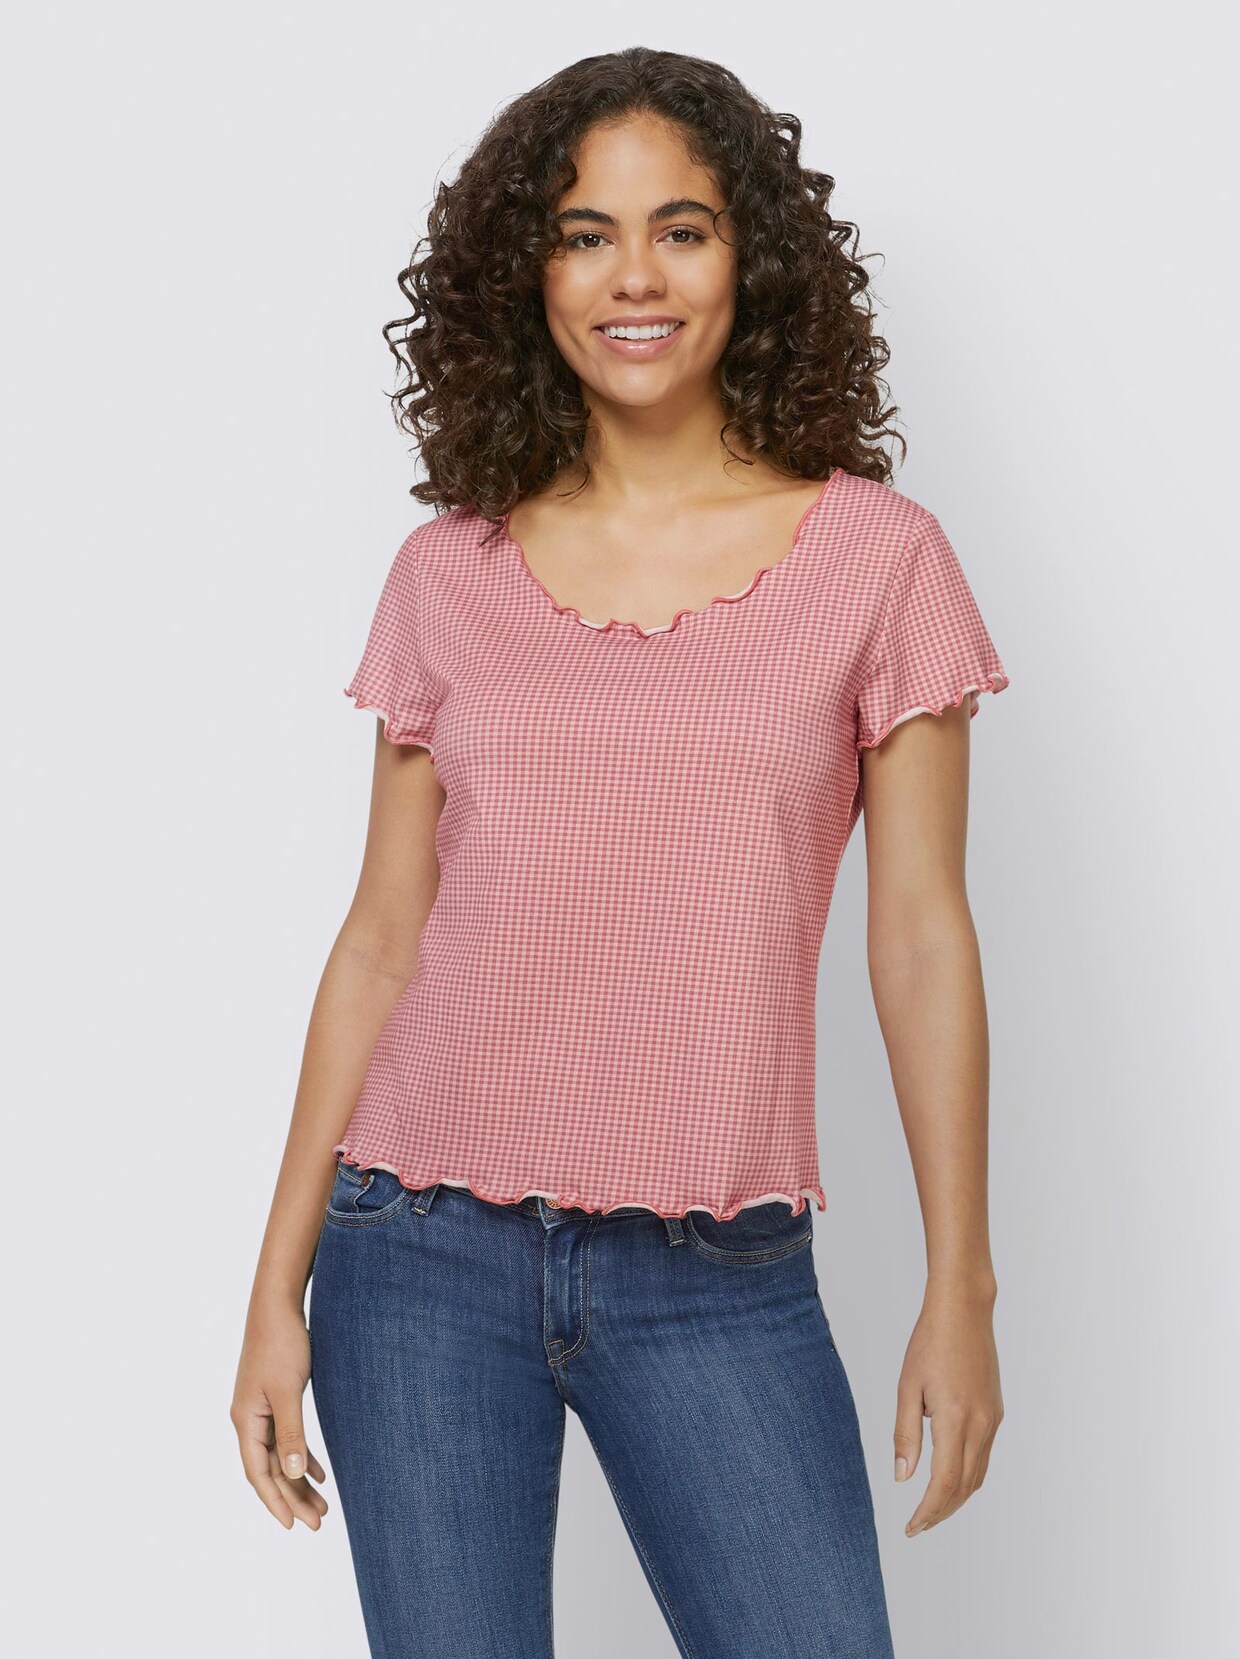 Linea Tesini Druck-Shirt - rosenquarz-weiß-bedruckt